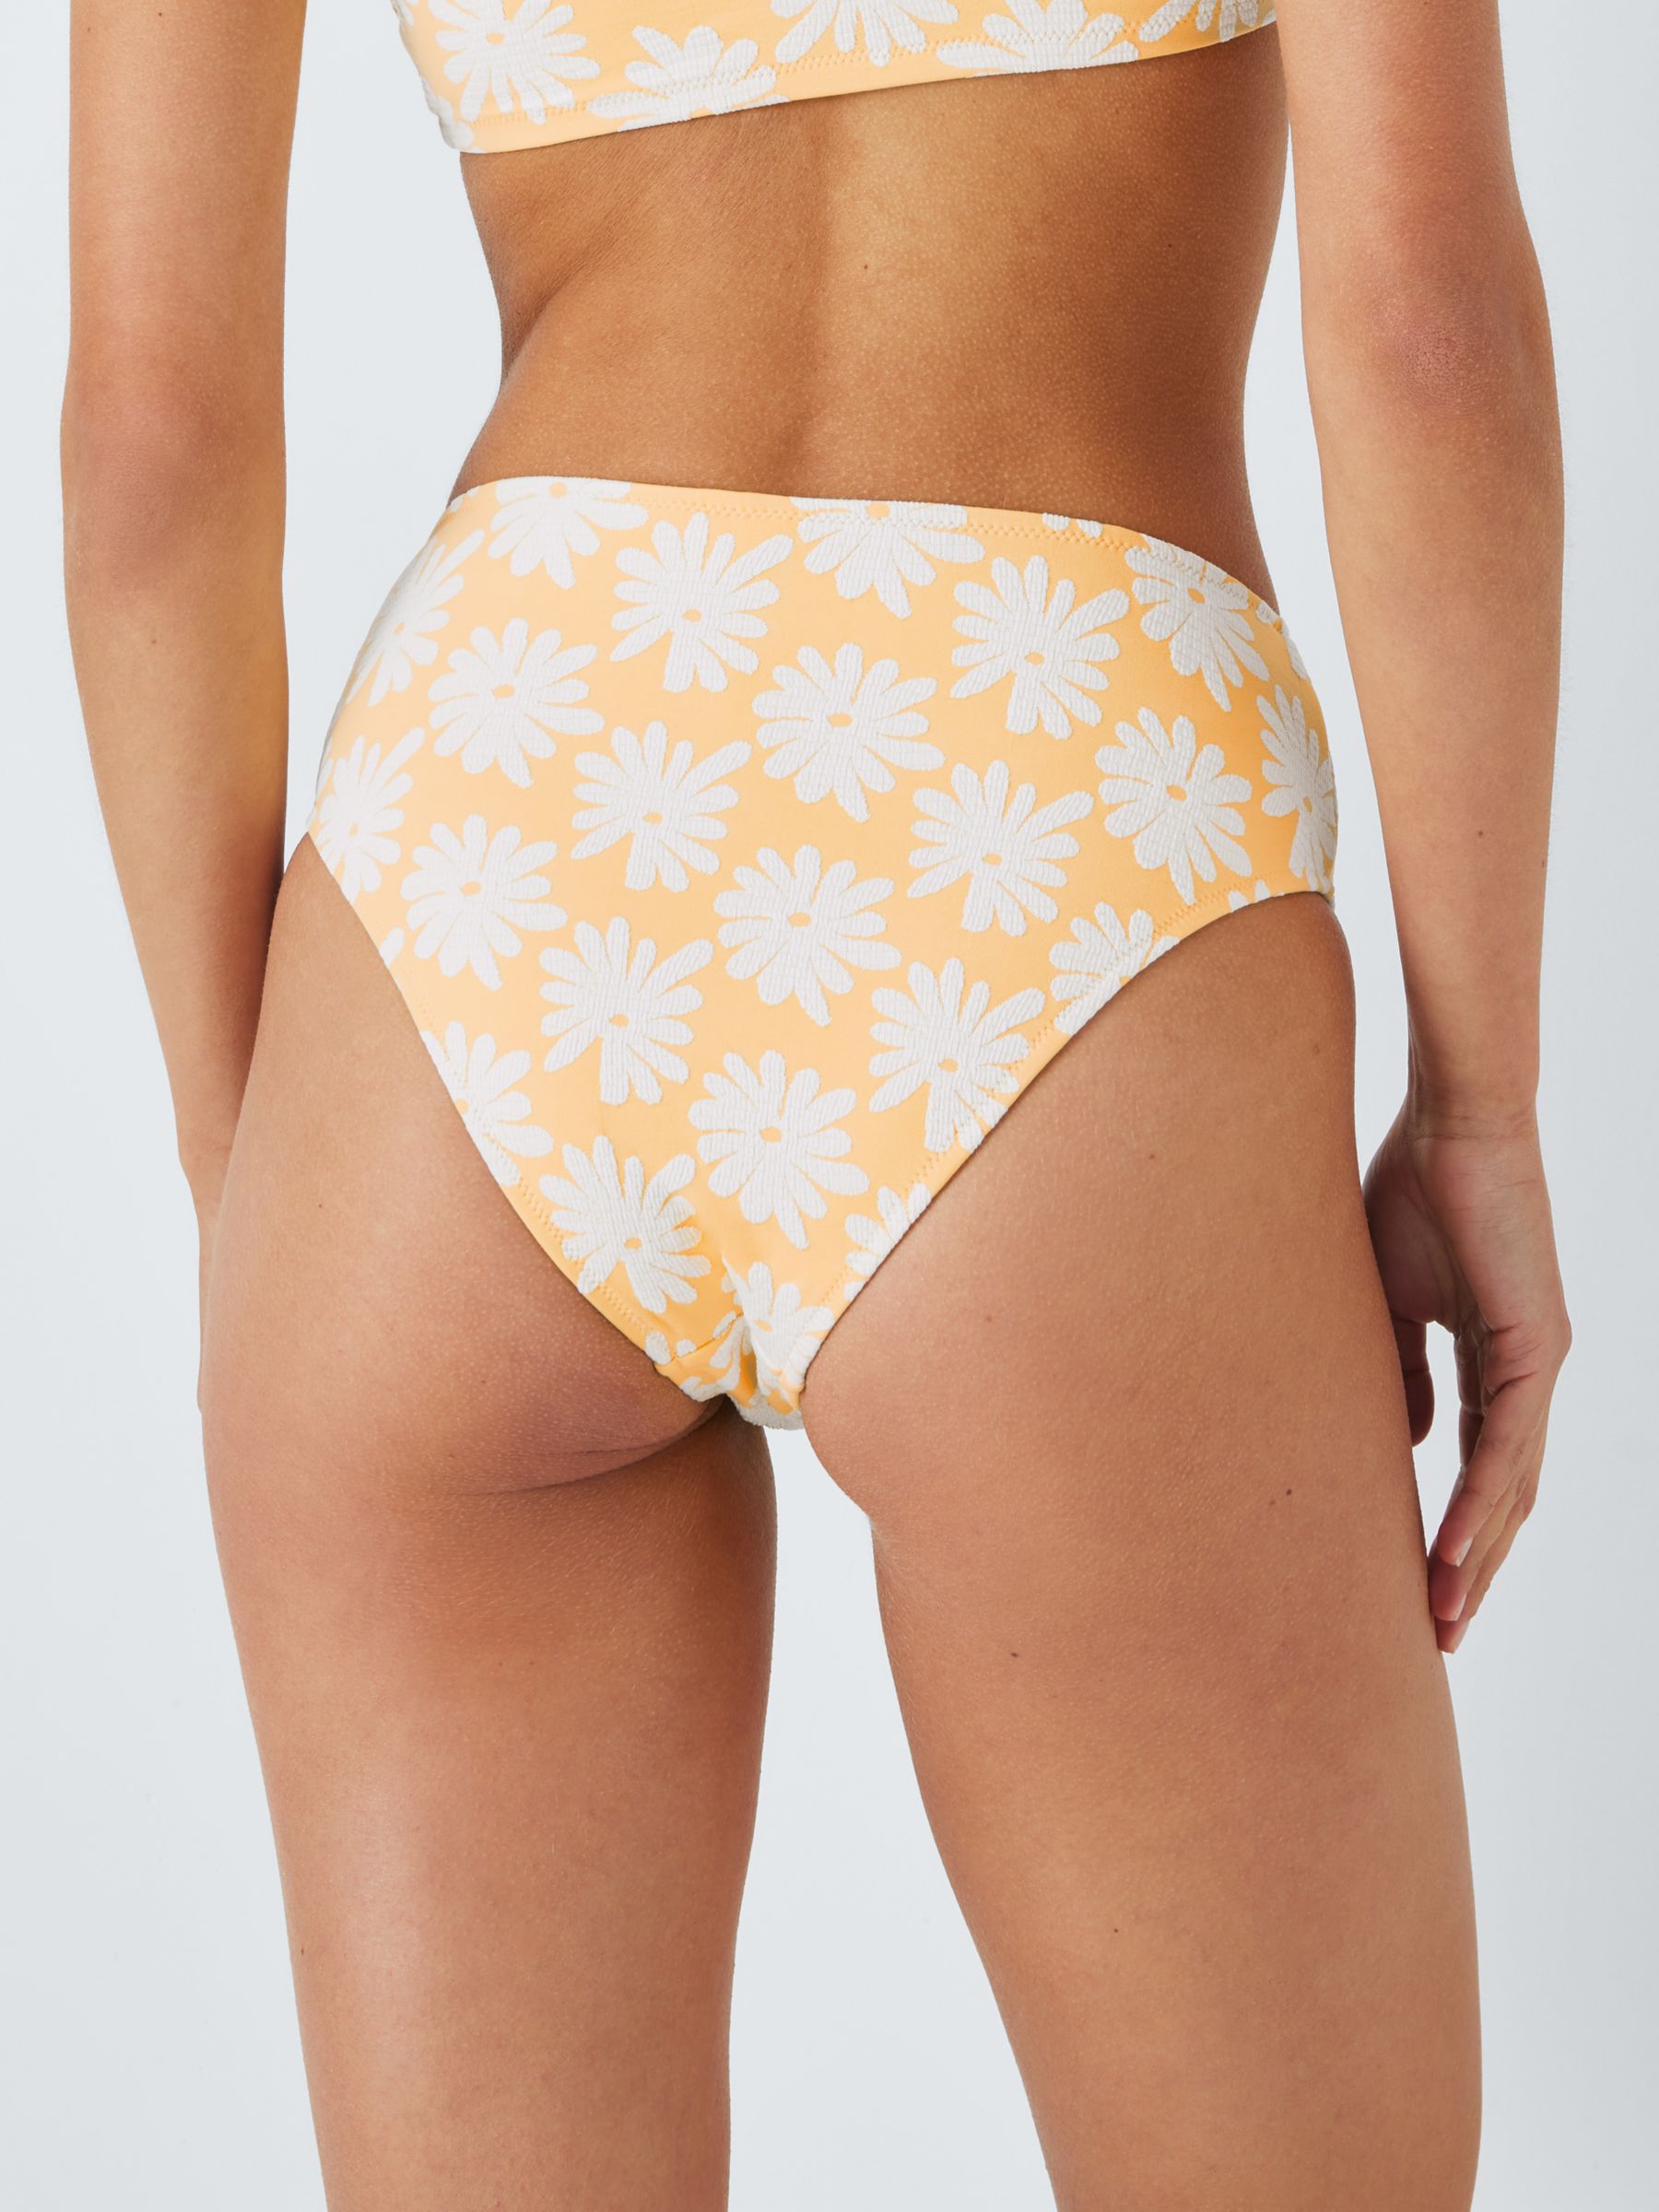 John Lewis ANYDAY Jacquard Floral Bikini Bottoms, Yellow, 8